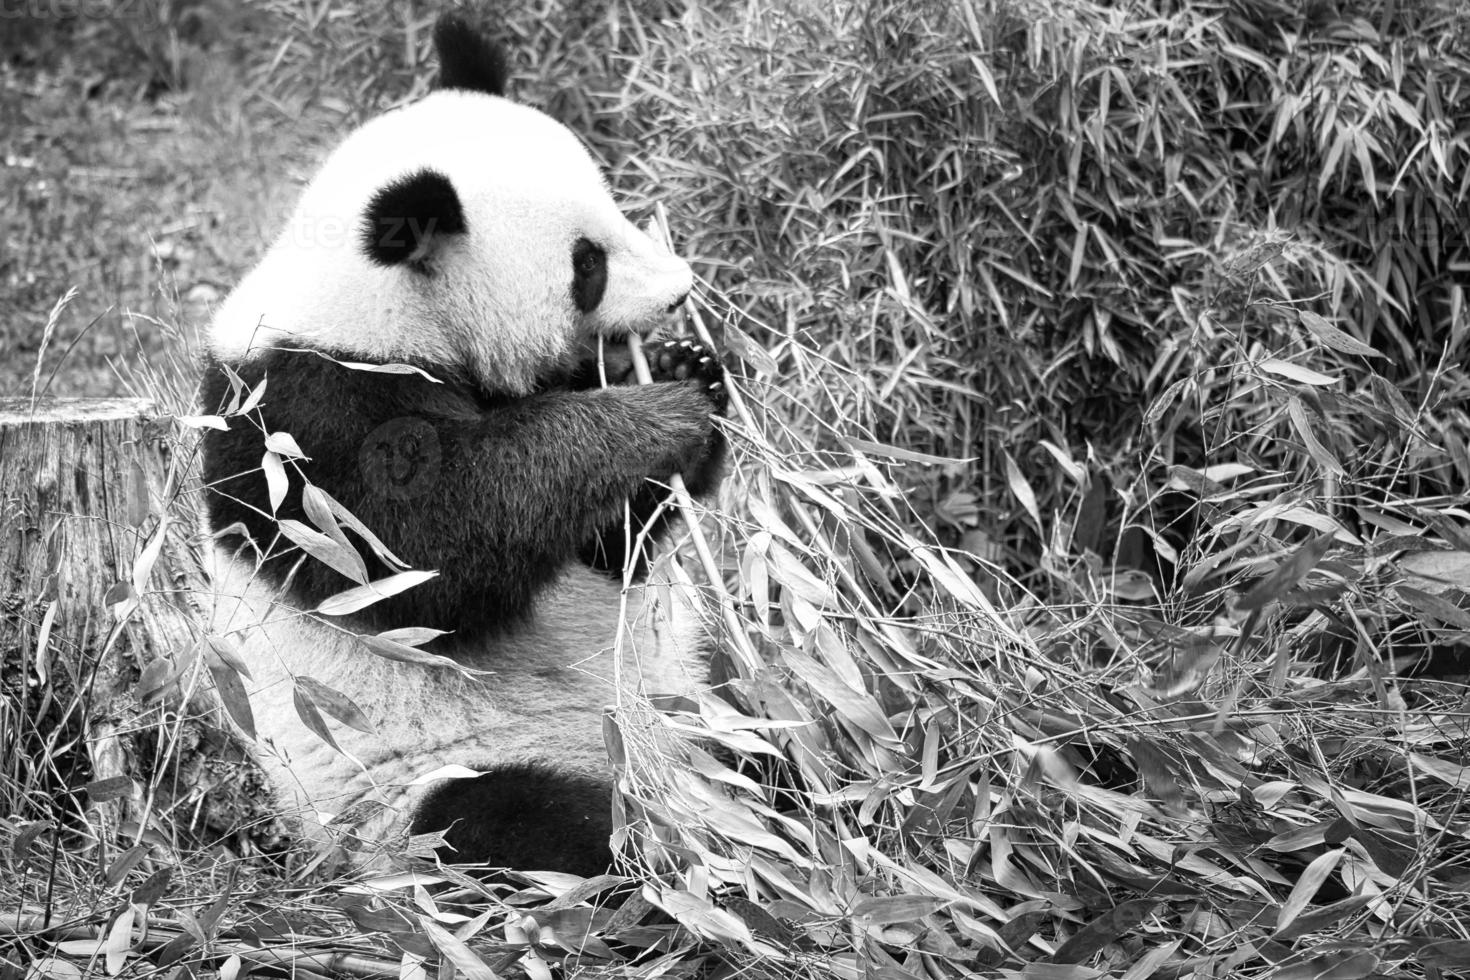 big panda in black and white, sitting eating bamboo. Endangered species. photo